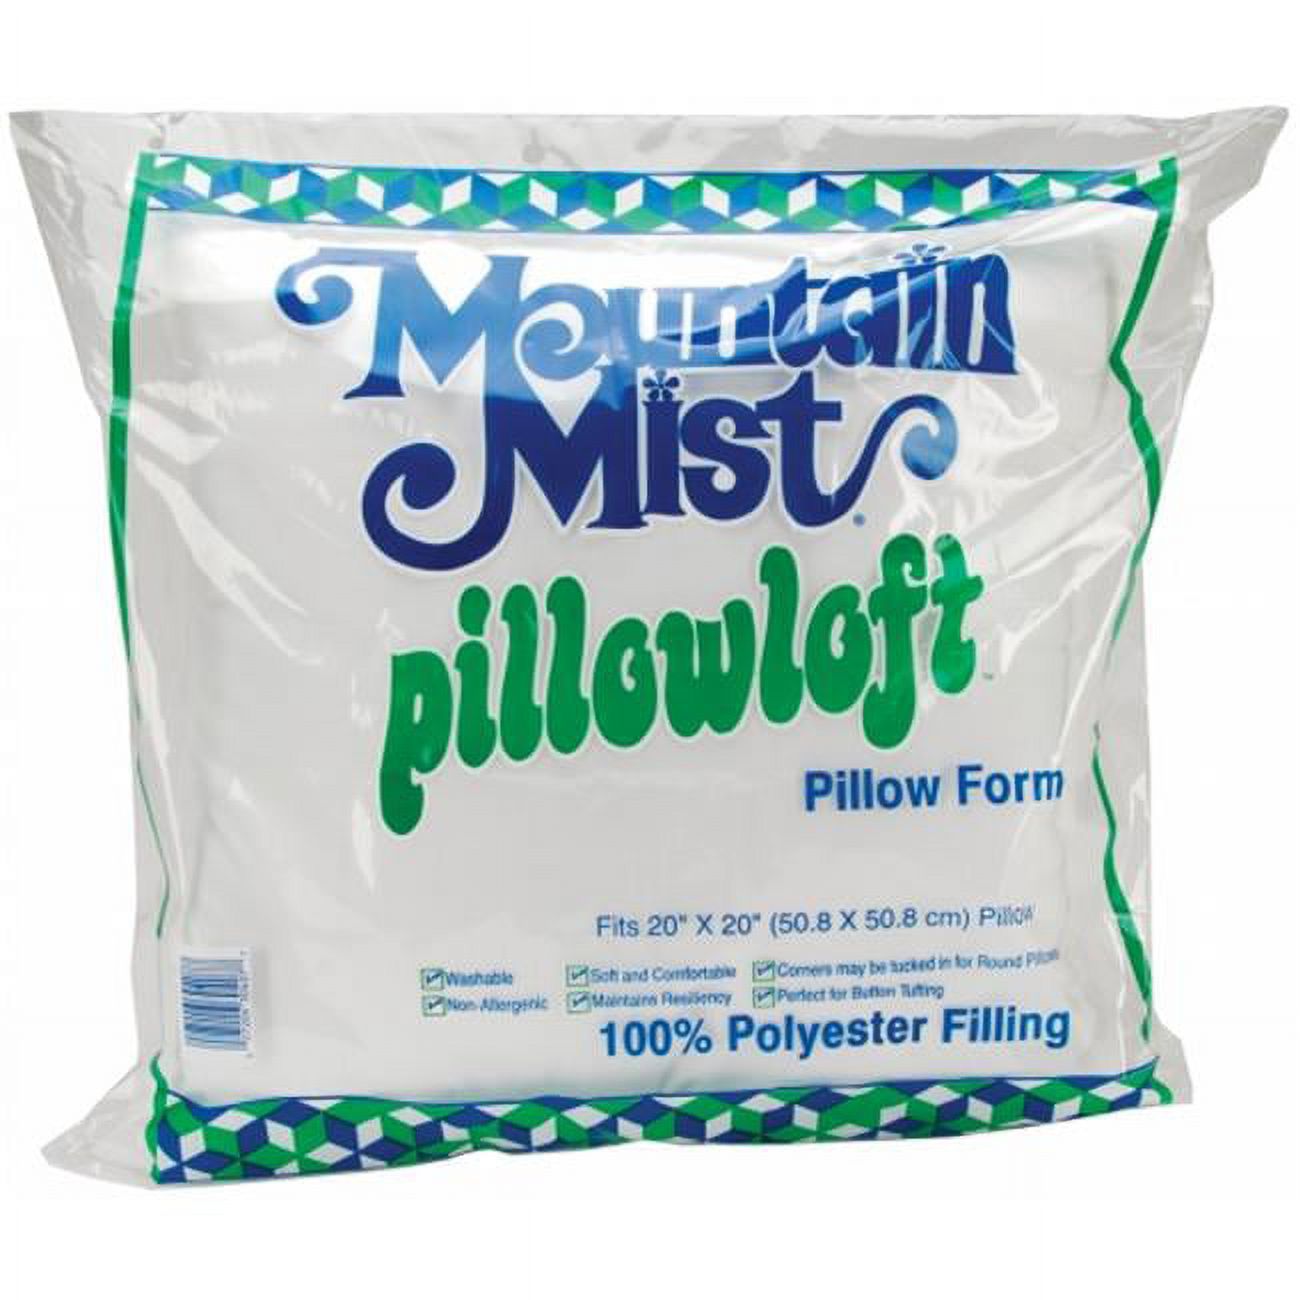 Mountain Mist Fiber 407MM Pillowloft Pillowforms 20 in. x 20 in.- - image 1 of 2